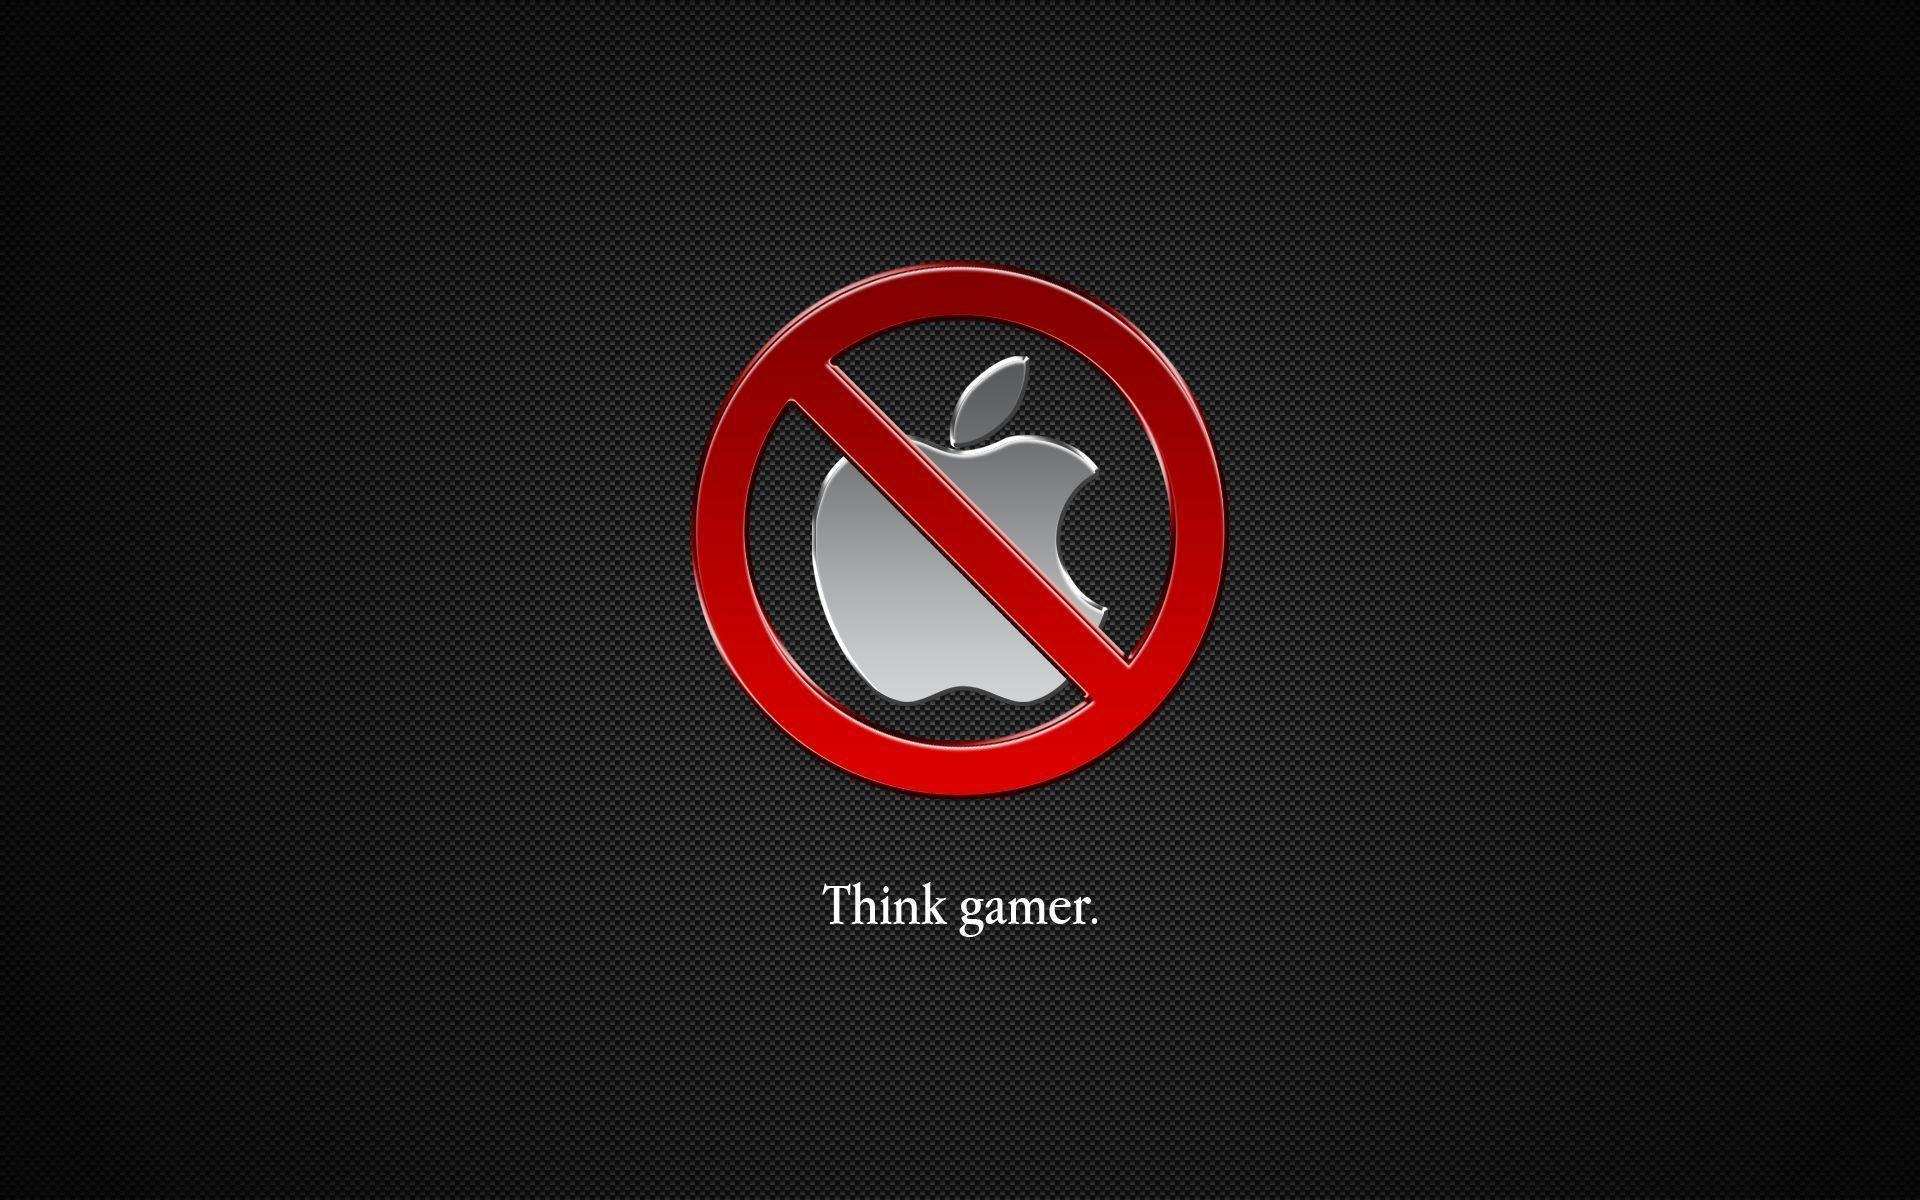 Gamer Logo Wallpaper Free Gamer Logo Background